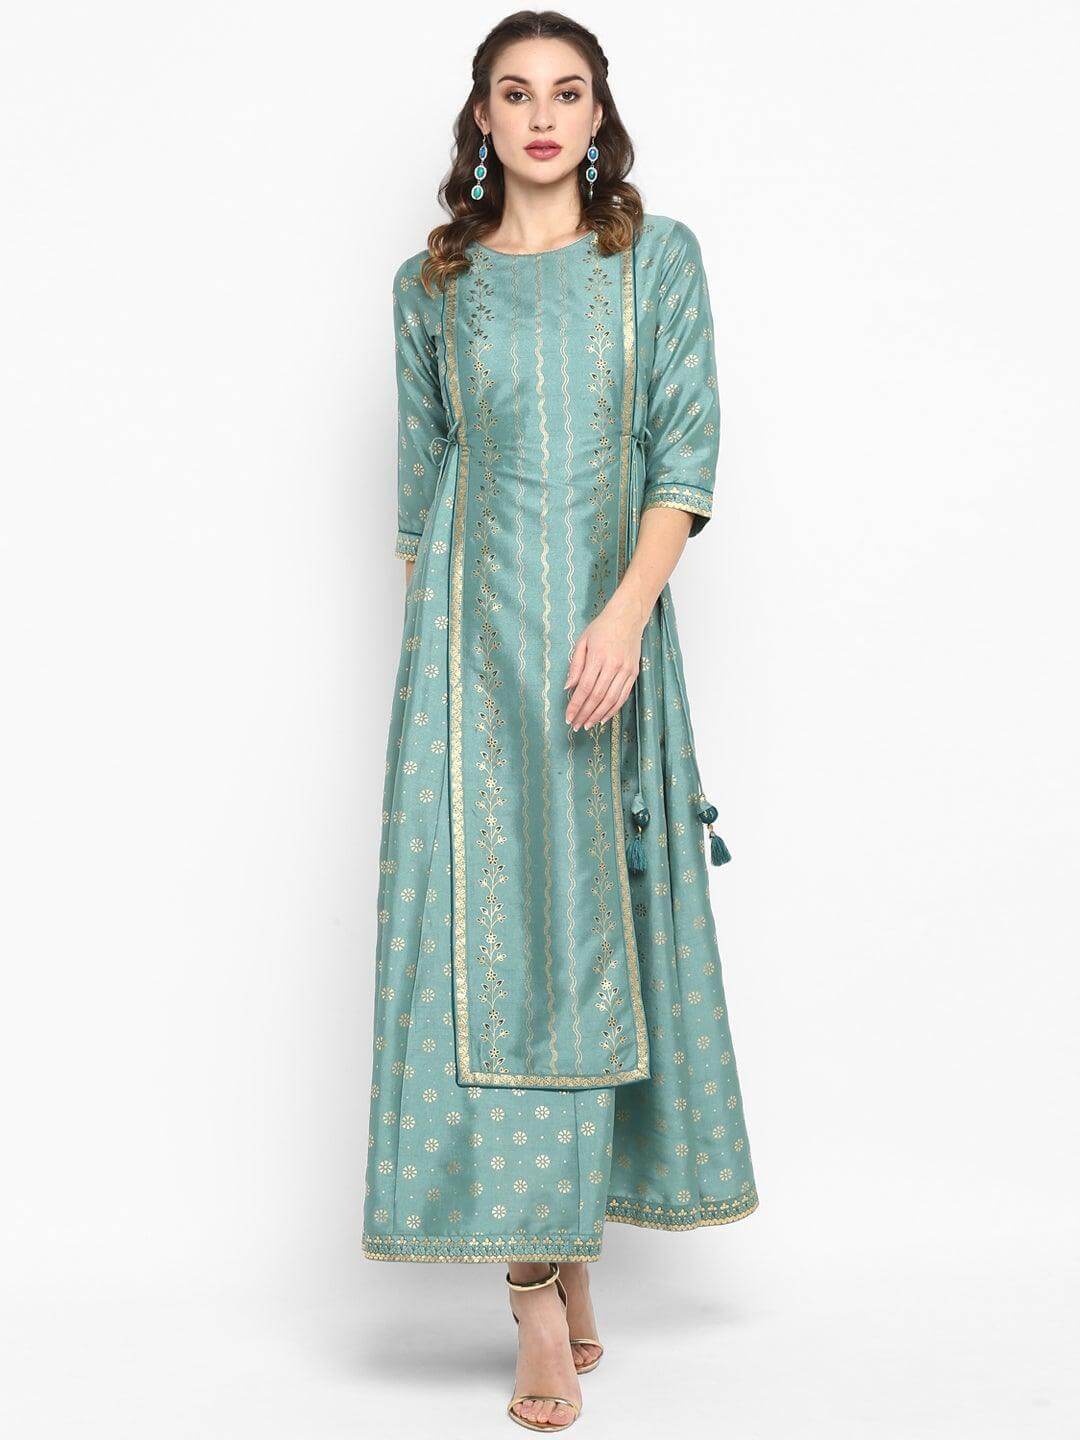 Green Rayon Crepe Foil Print Flared Ethnic Dress Janasya